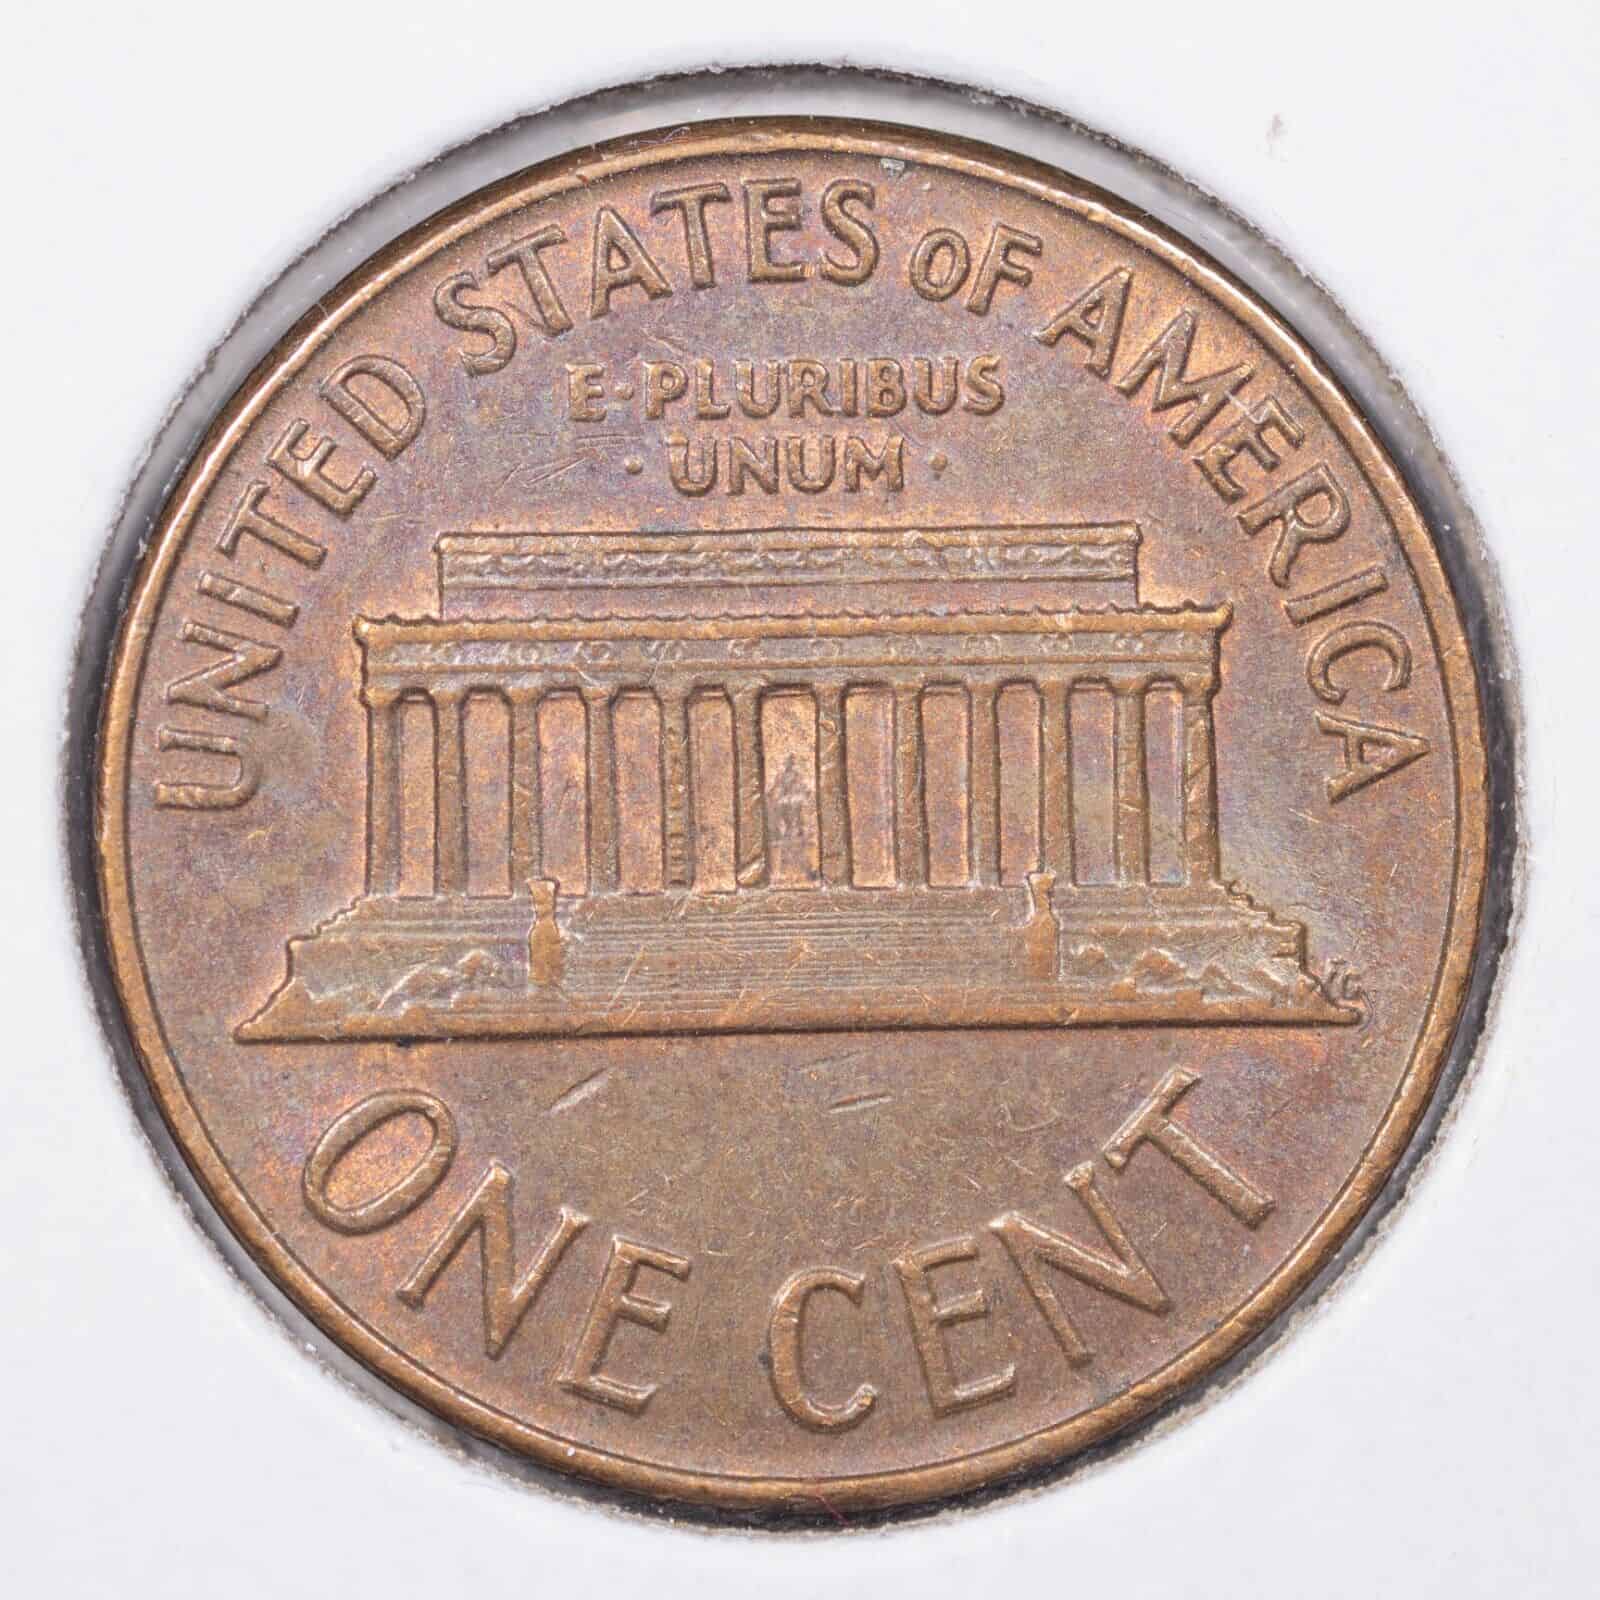 1964 Penny Doubled Die Reverse Error